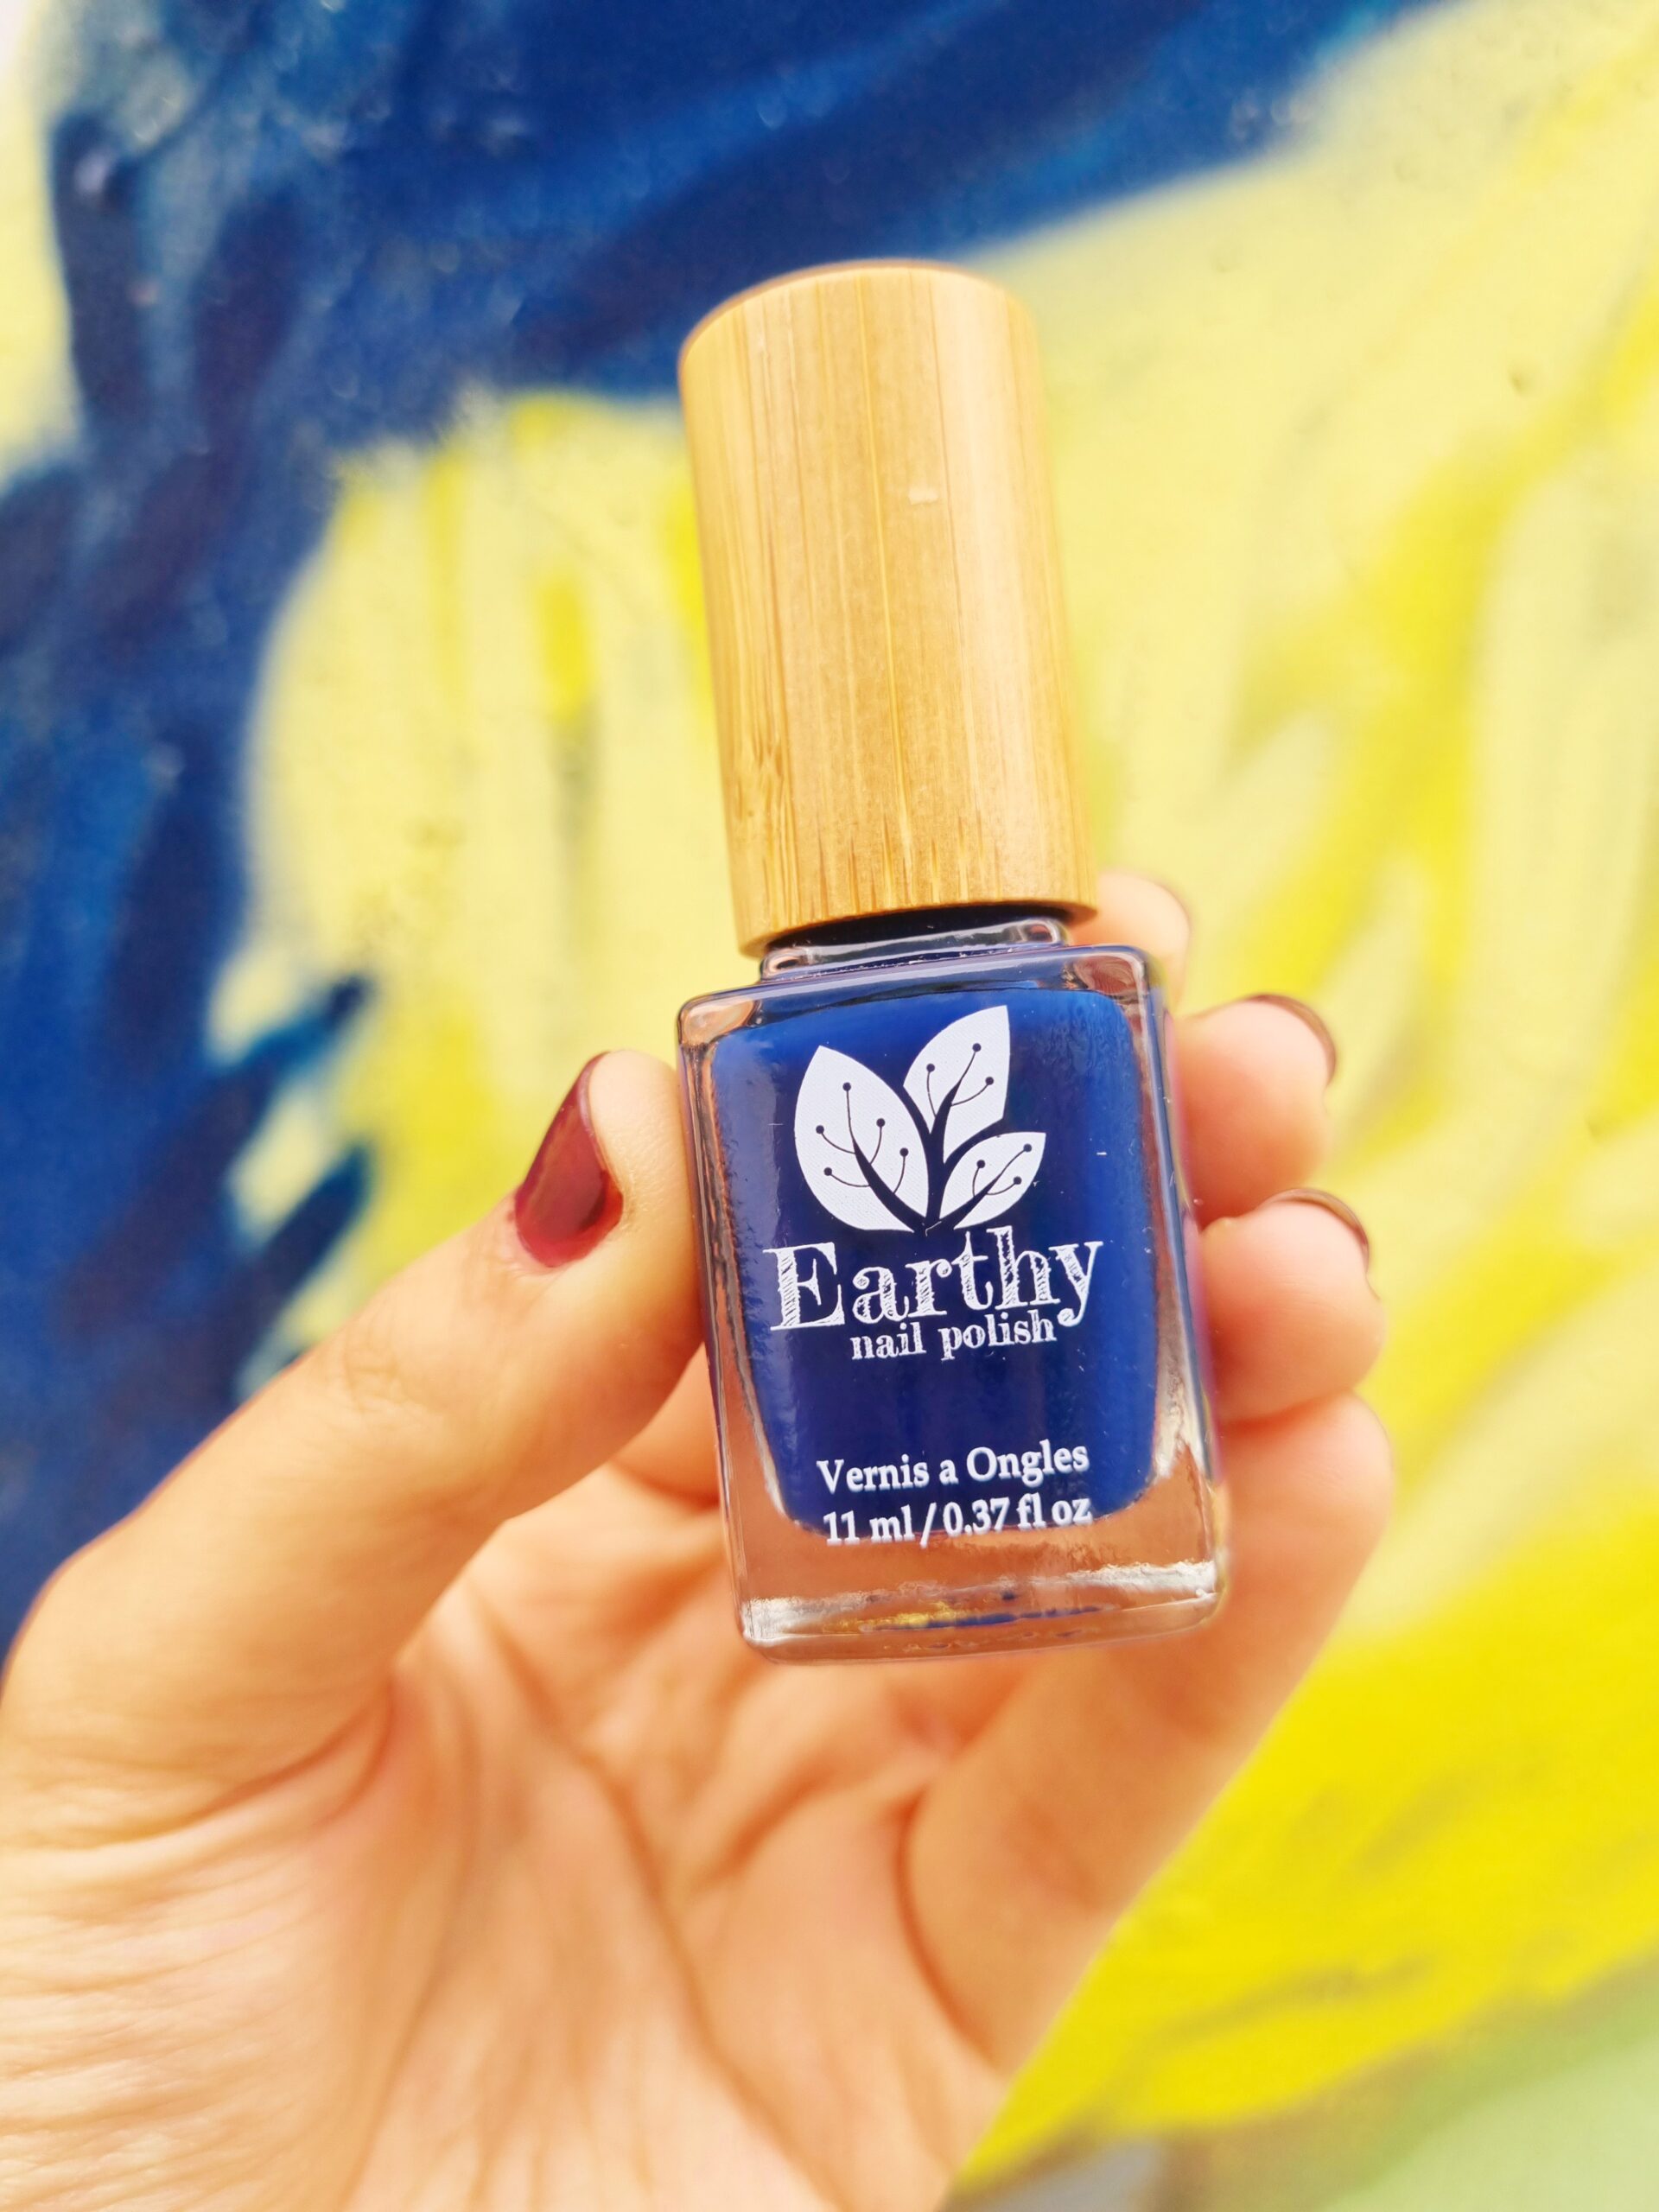 <img src="earthy.jpg" alt="earthy nail polish cobalt blue"/>